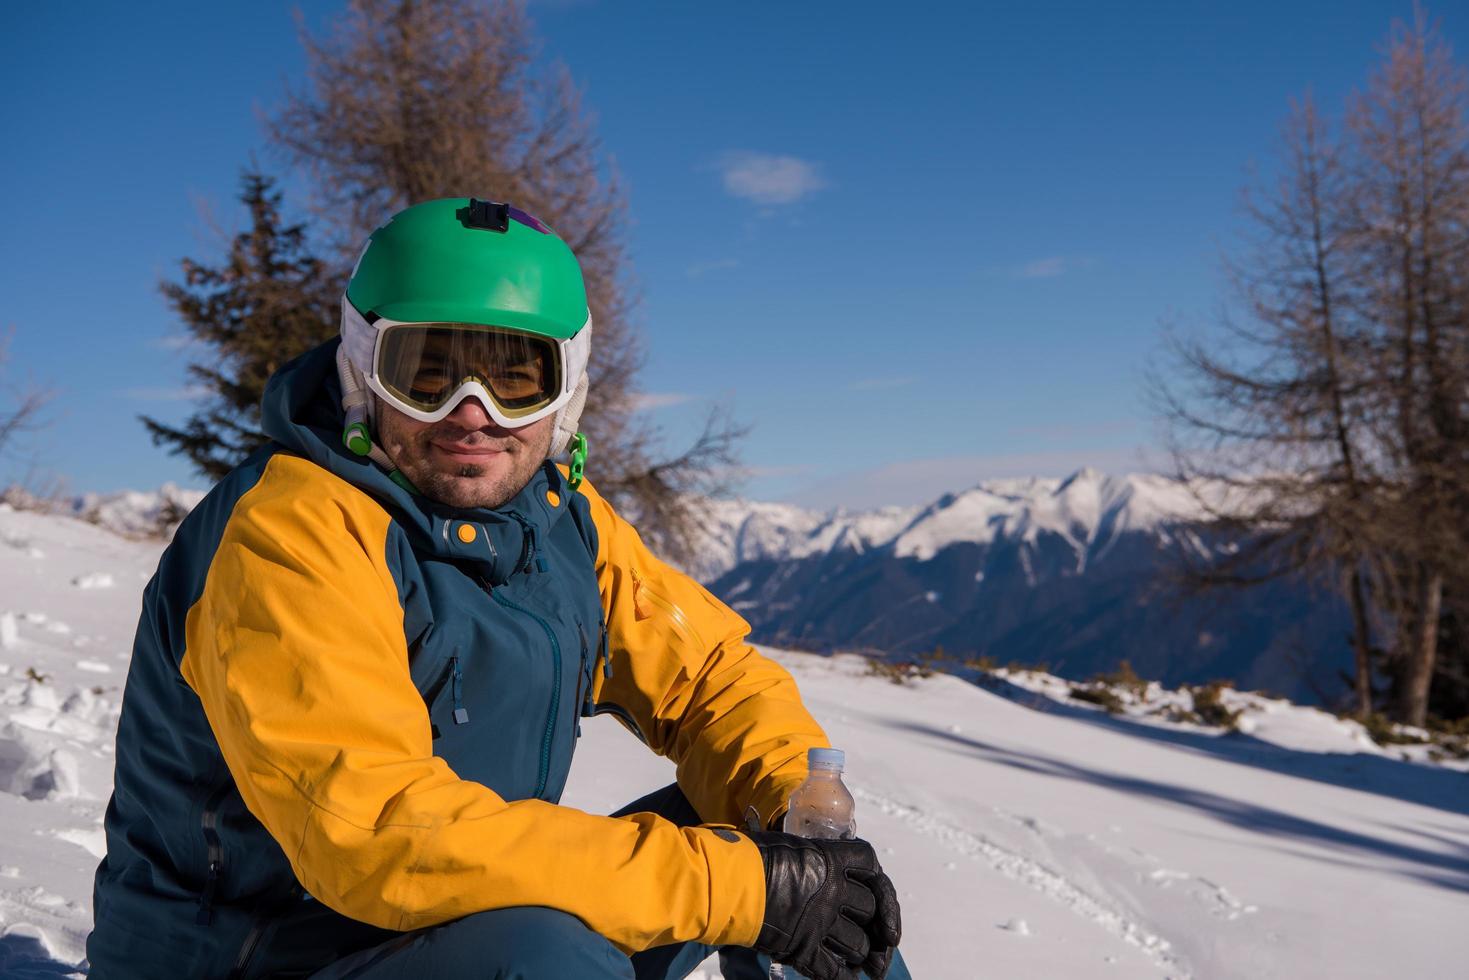 snowboarder portrait view photo